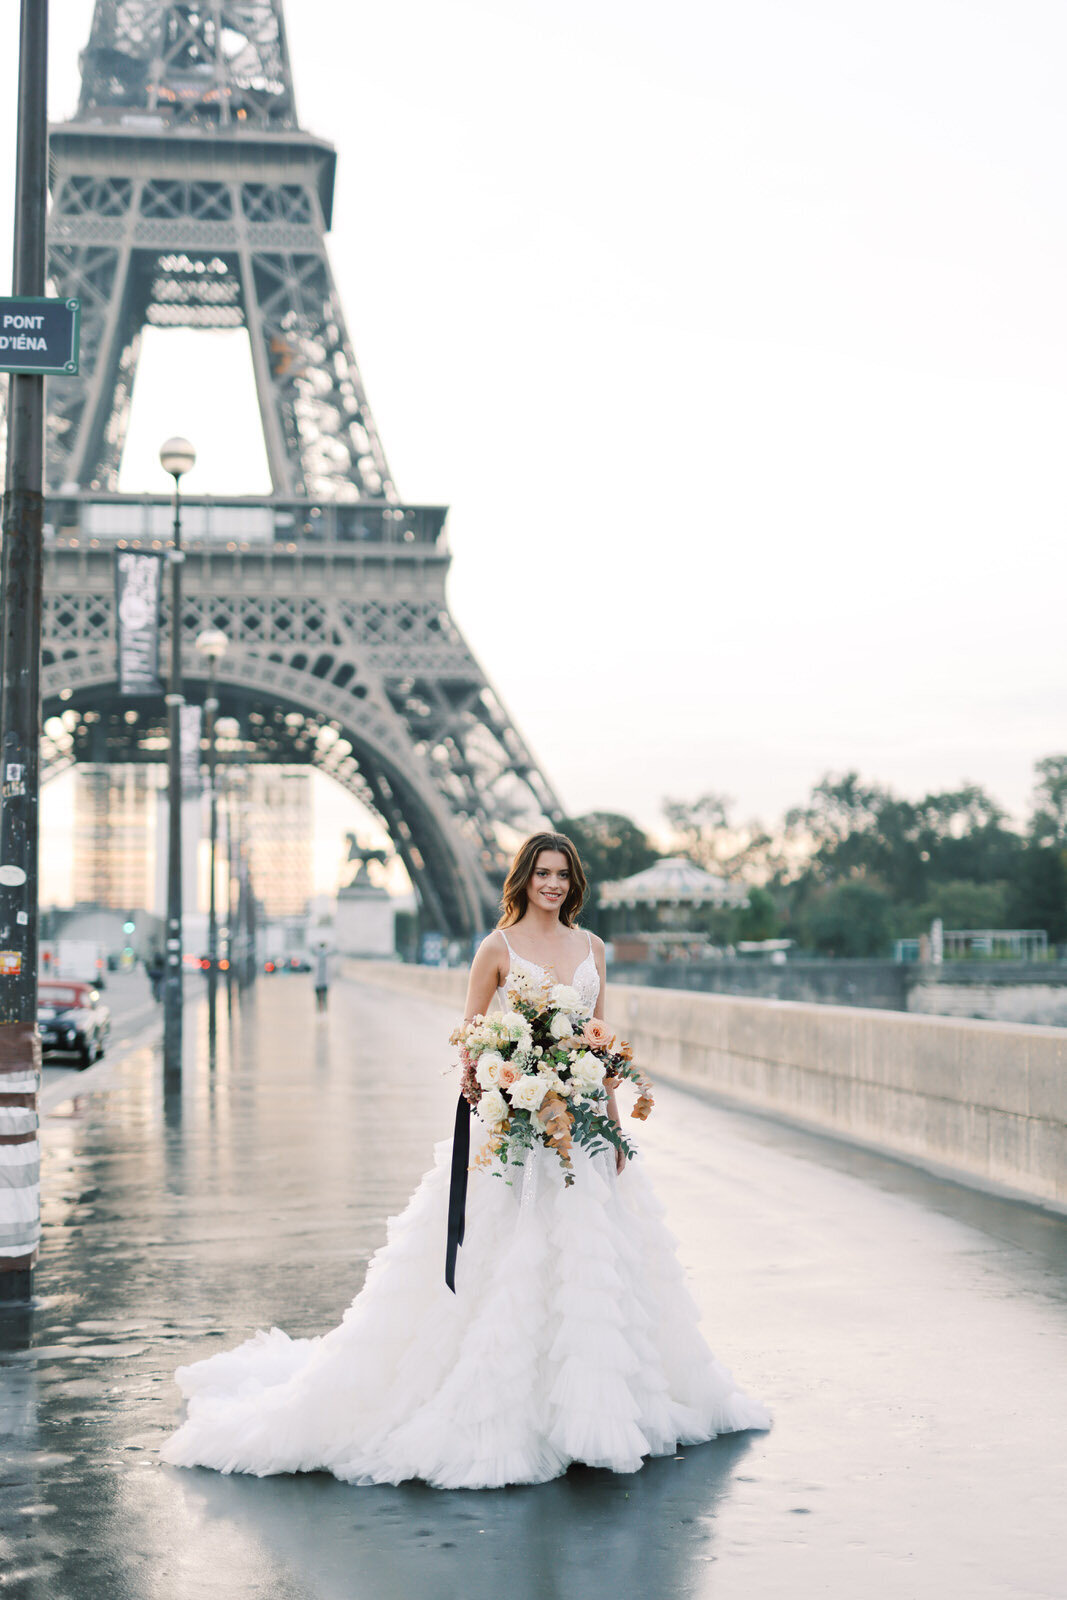 Modern Film Wedding Photography in Paris France 16